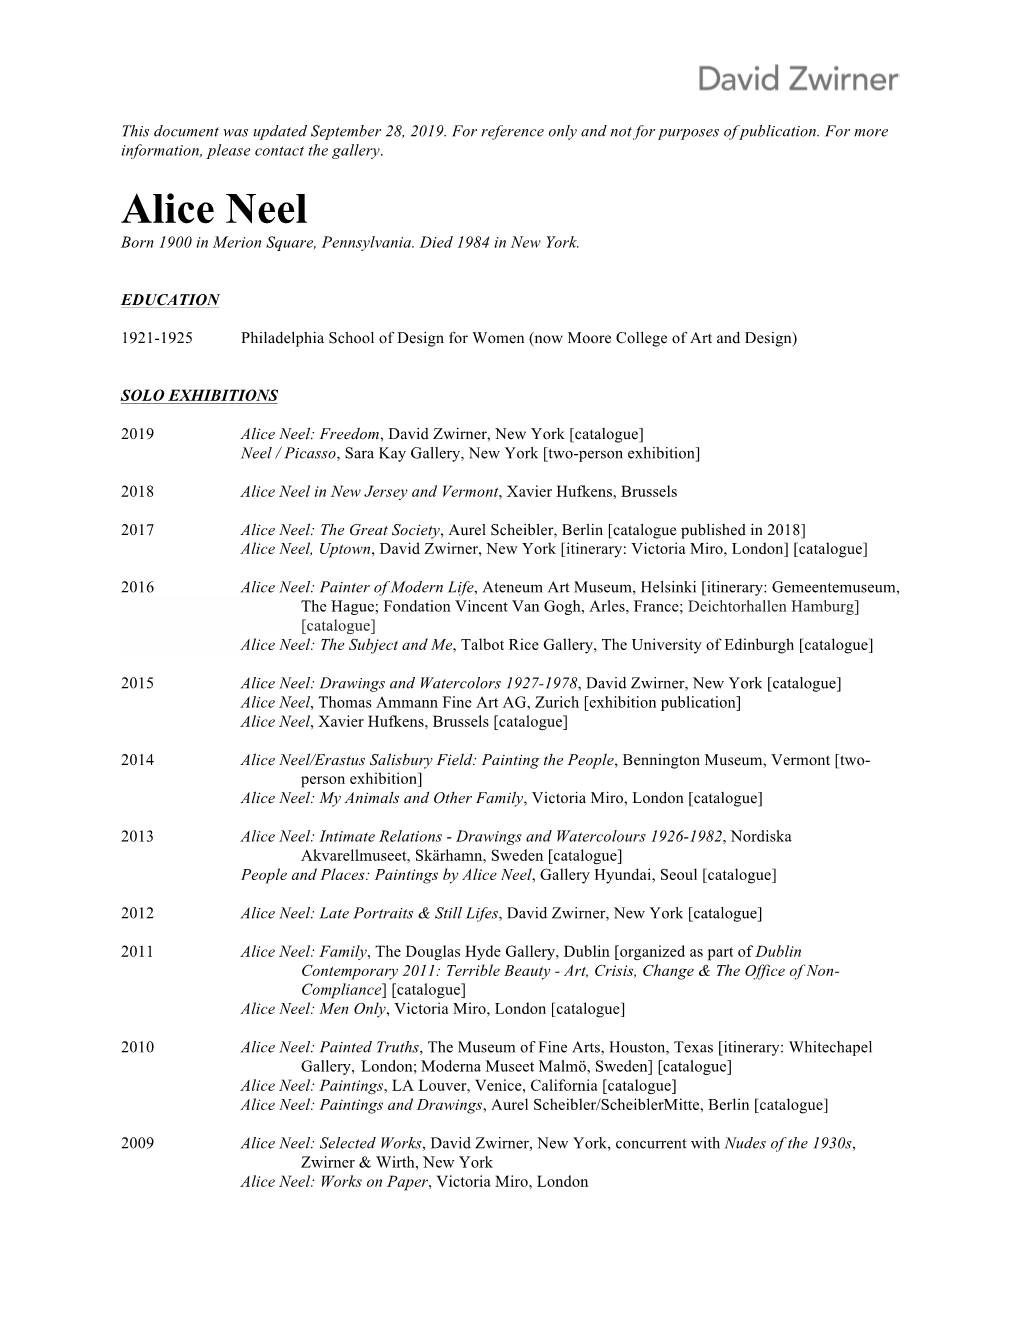 Alice Neel Born 1900 in Merion Square, Pennsylvania